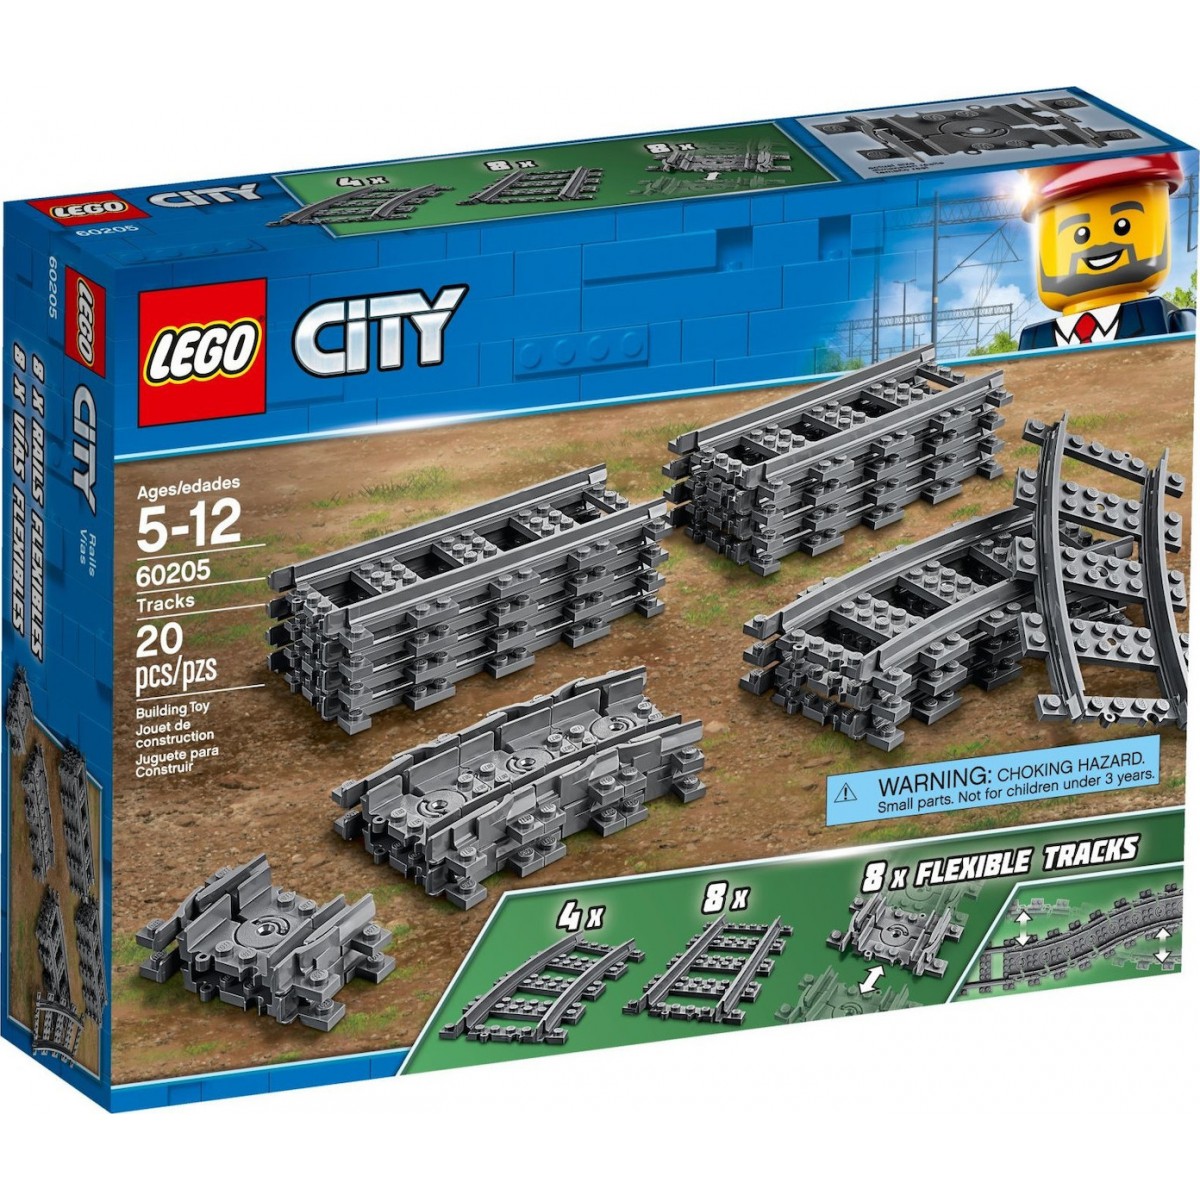 LEGO CITY 60205 TRACKS